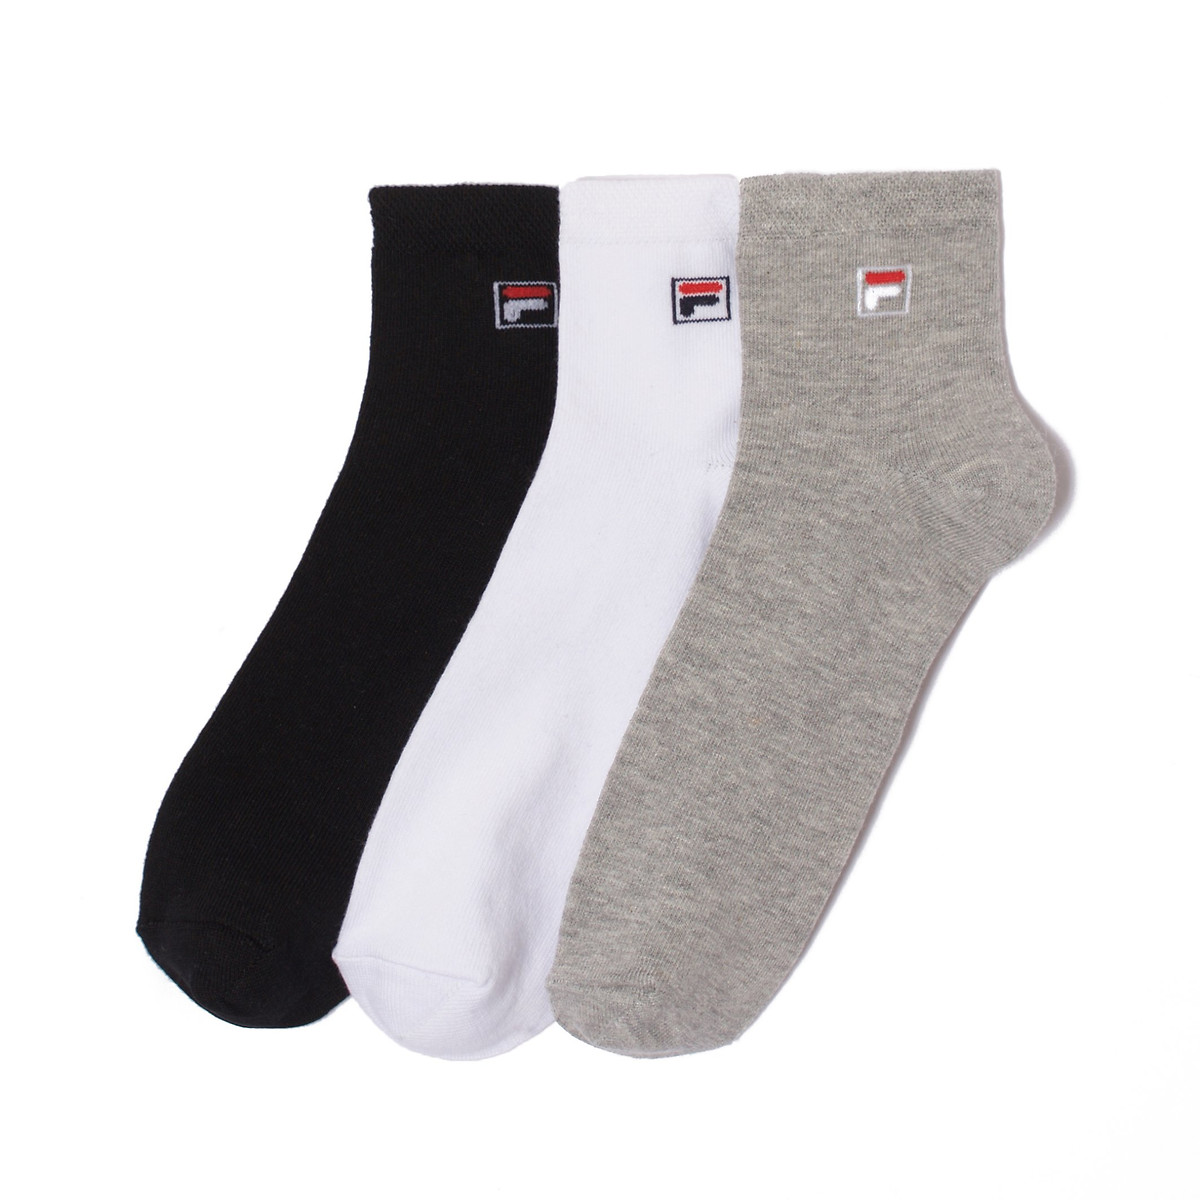 Pack of 3 pairs of unisex trainer socks, grey + white + black, Fila ...